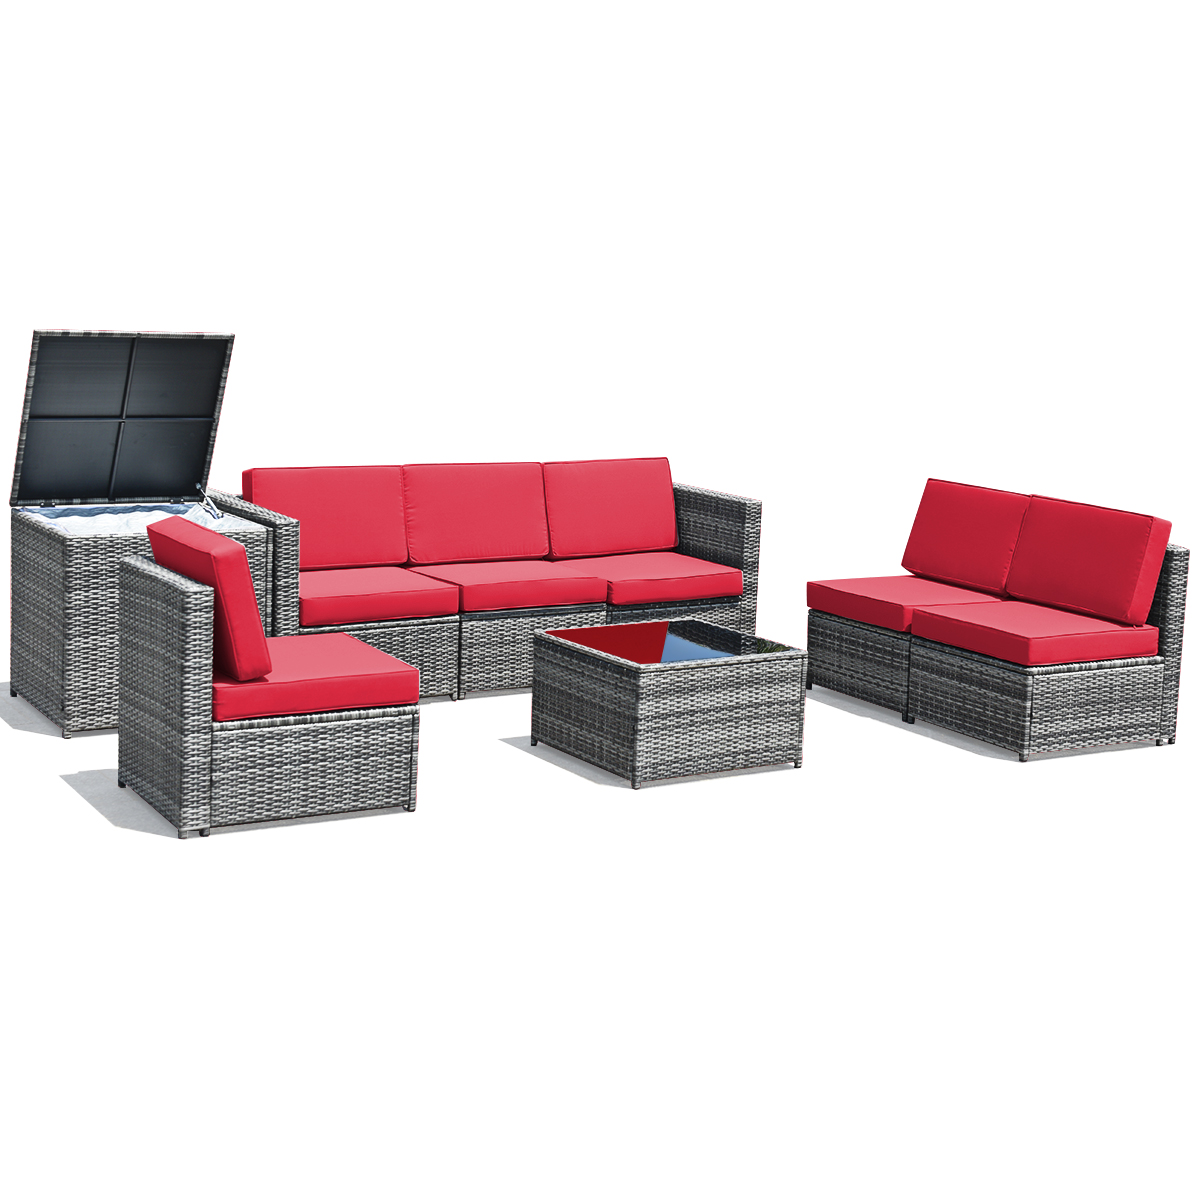 Patiojoy 8-Piece Outdoor Wicker Rattan Conversation Sofa Set w/ Storage Table Red - image 1 of 6